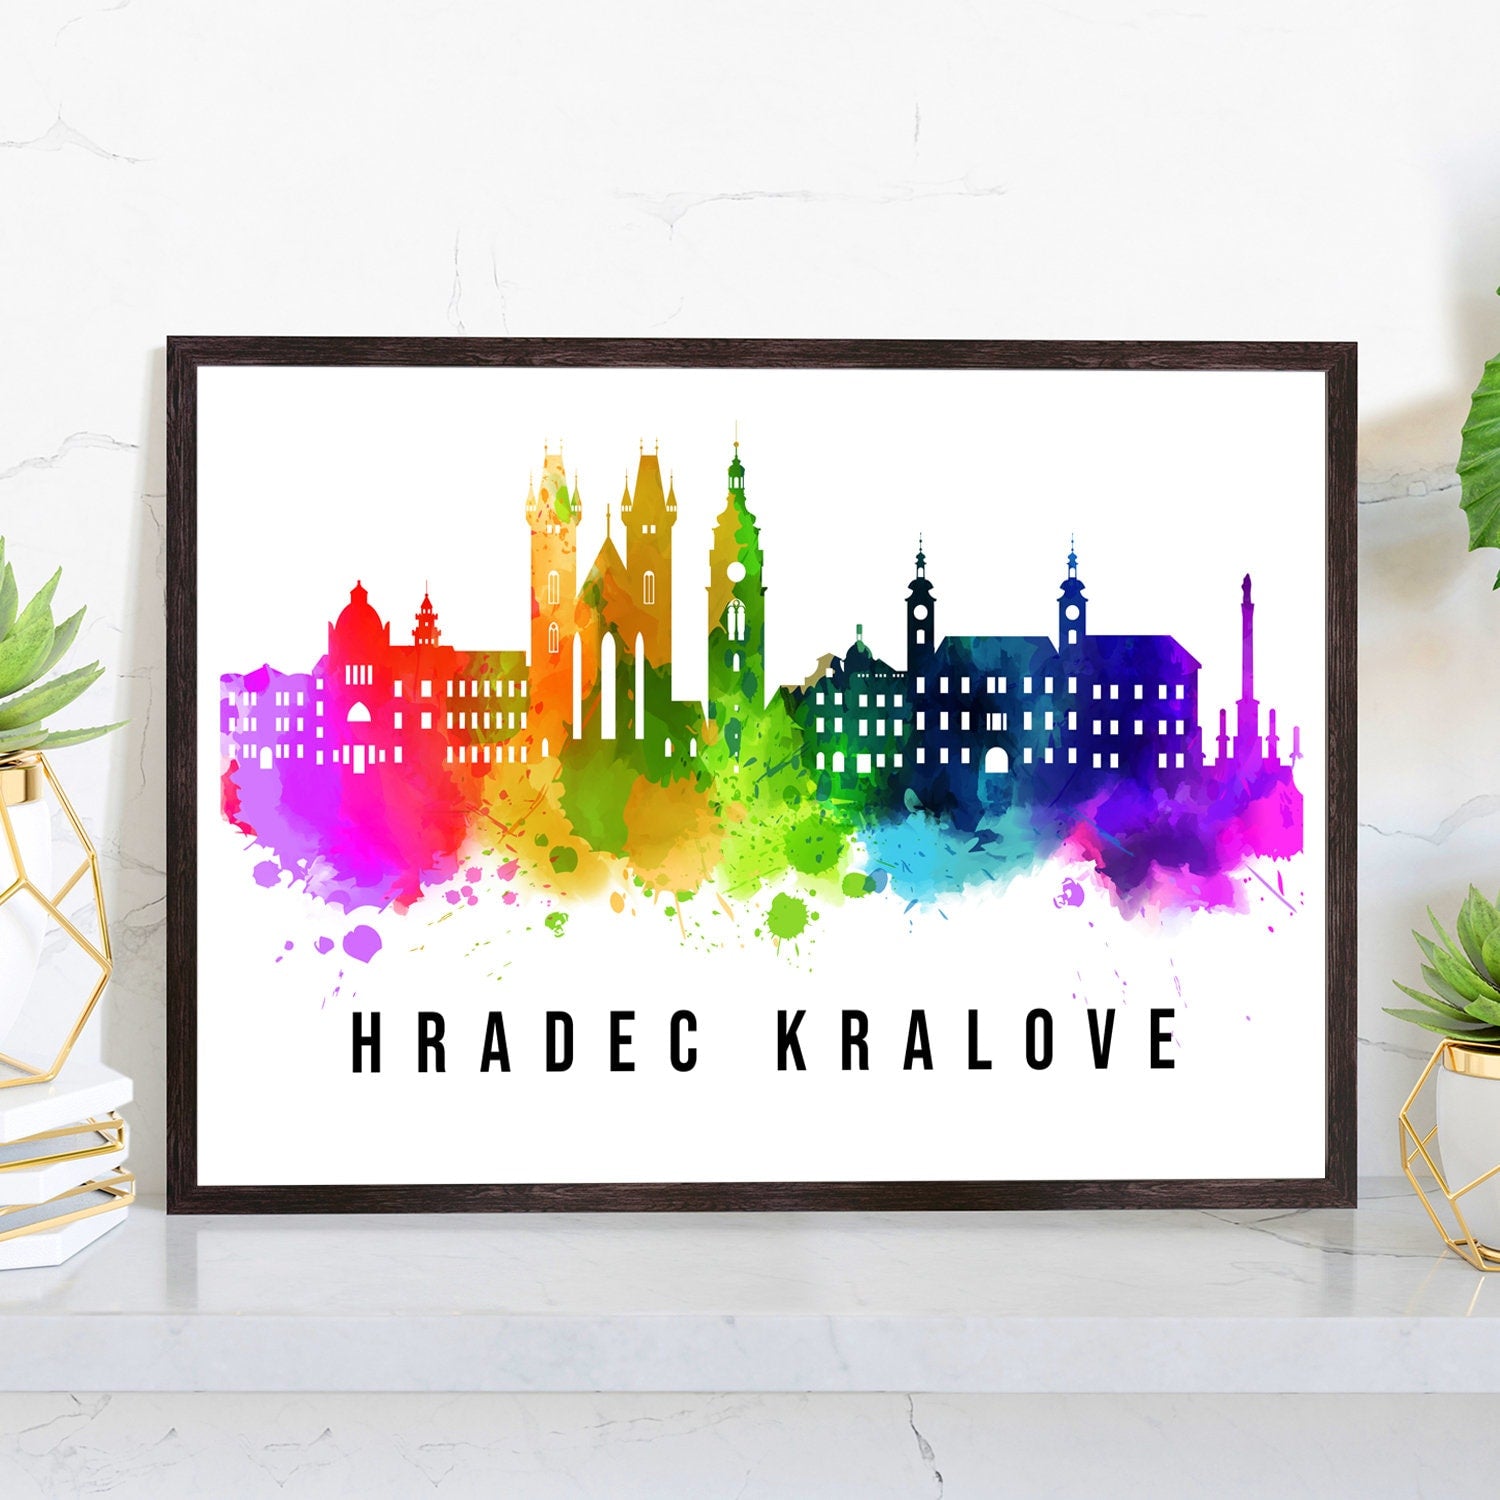 Hradec Kralove Czech Republic Poster, Skyline poster cityscape poster, Landmark City Illustration poster, Home wall decor, Office wall art